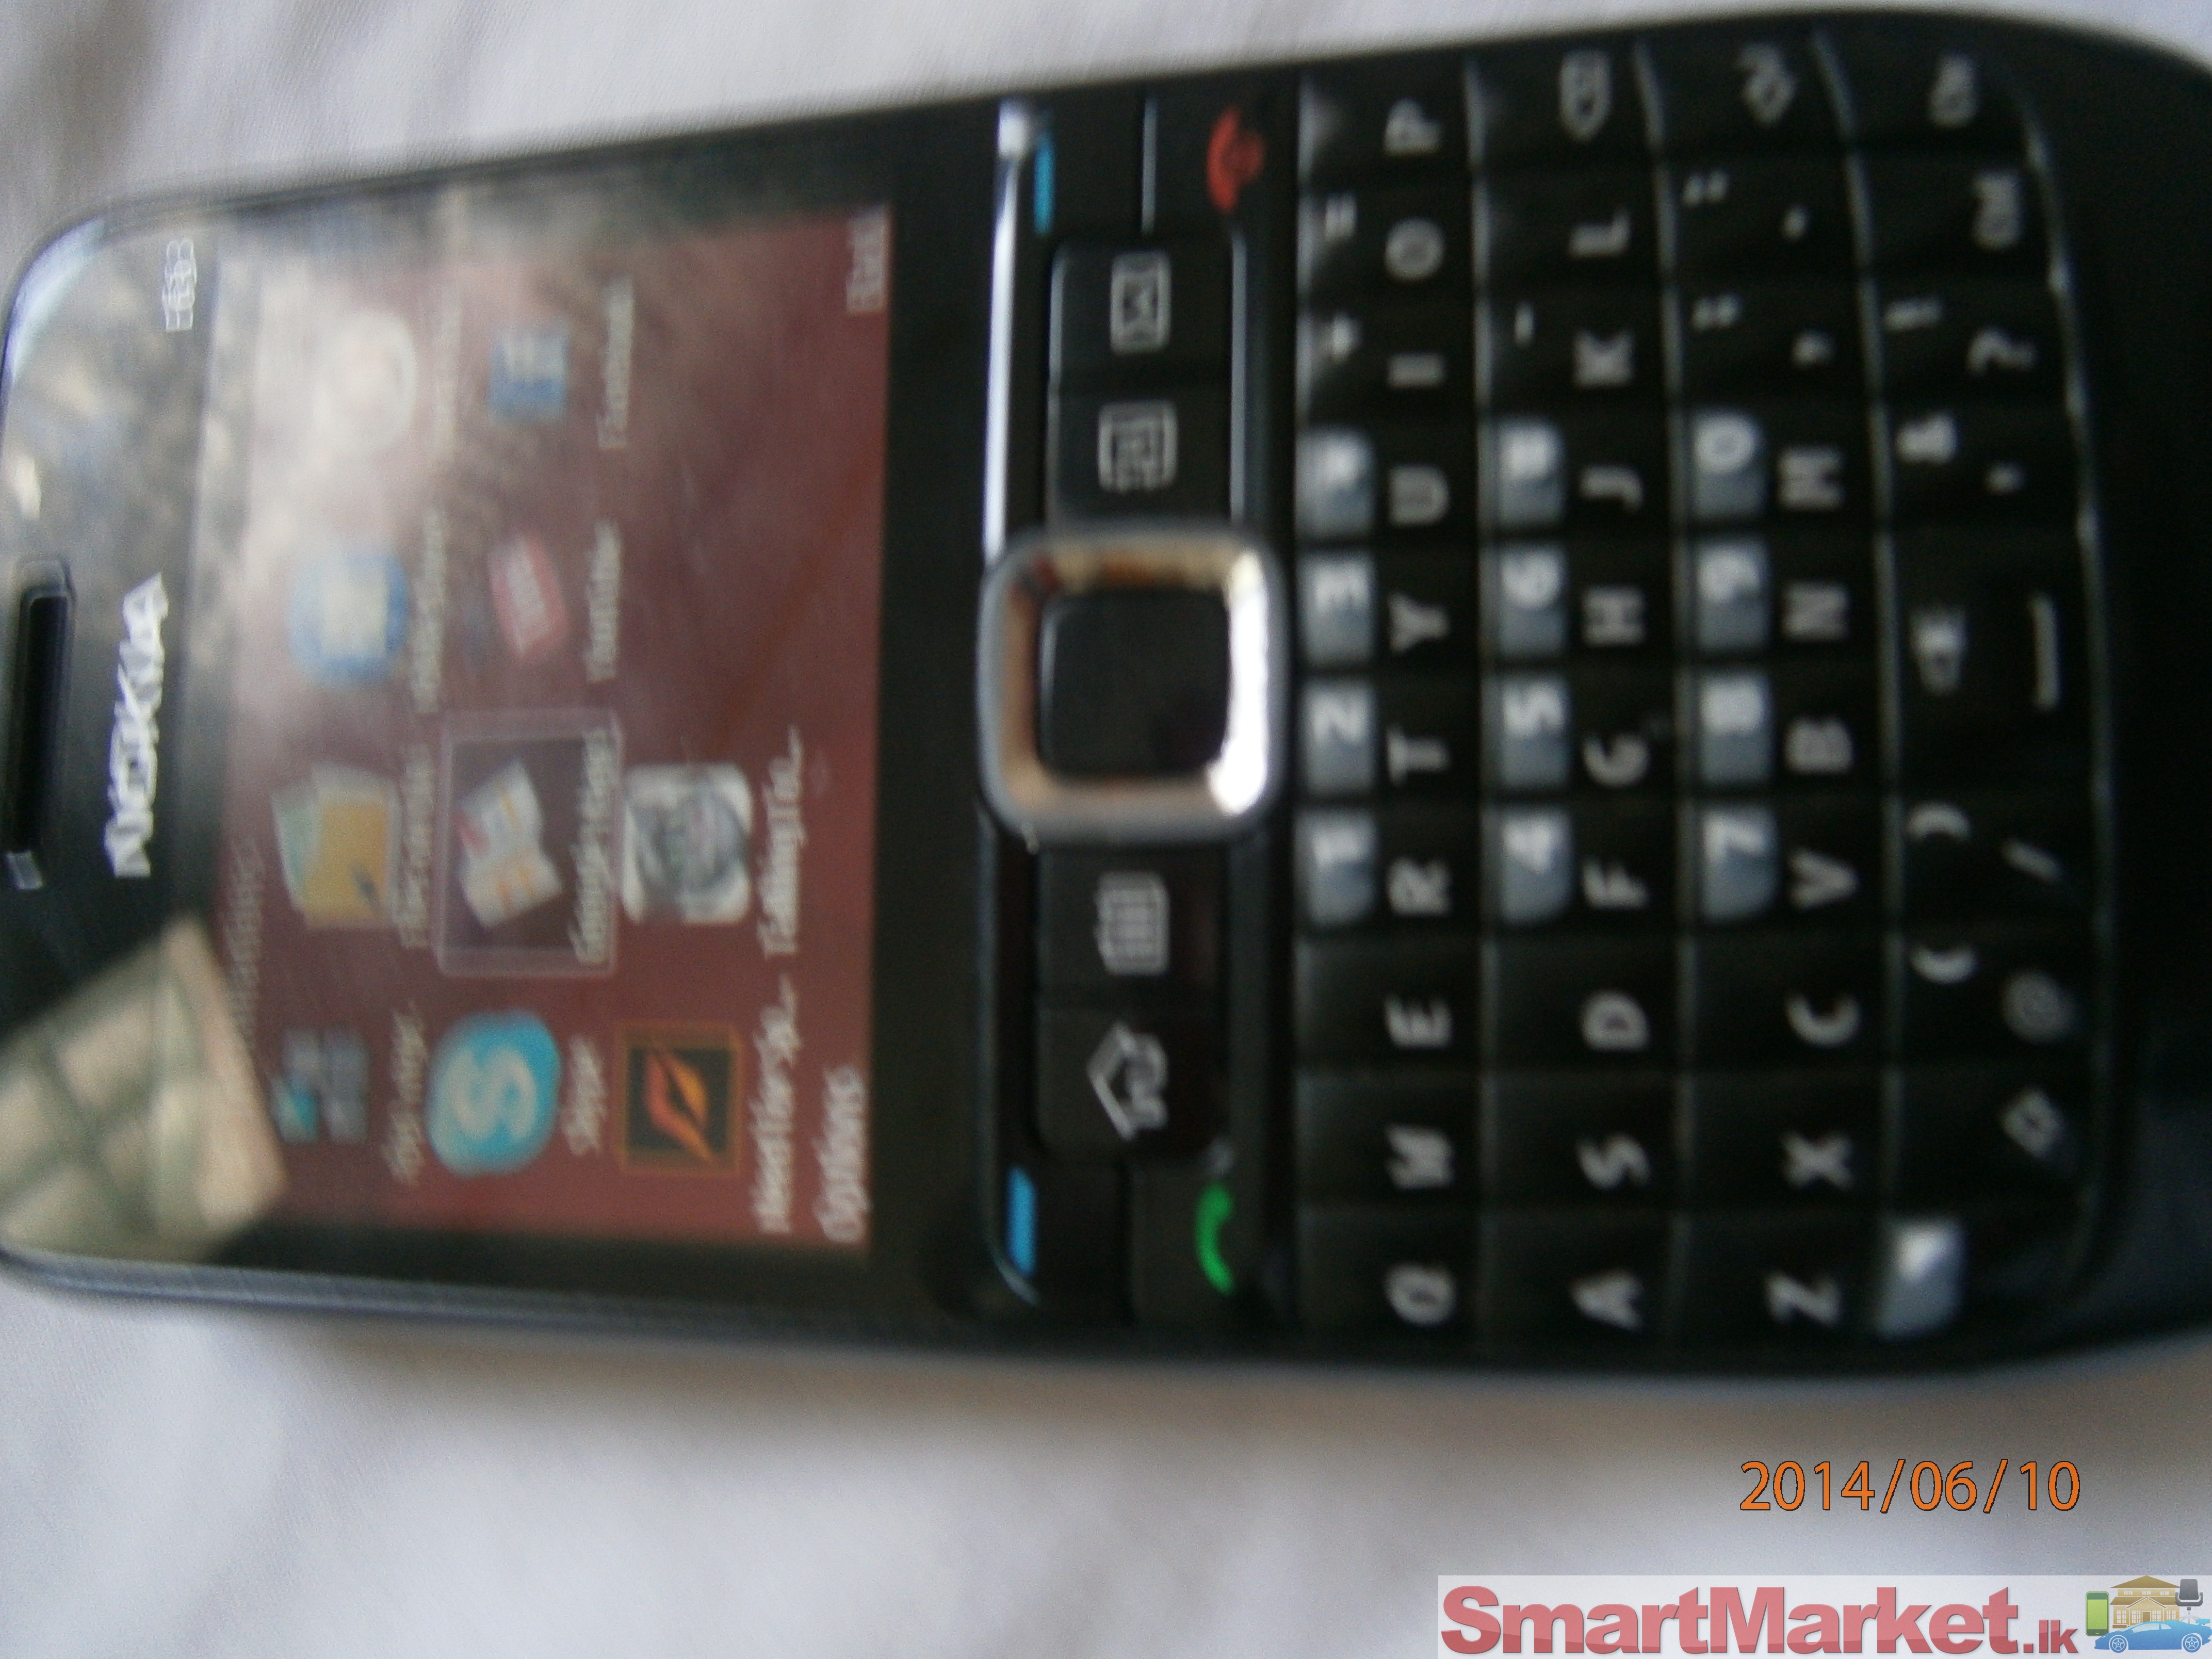 Nokia E63 3G